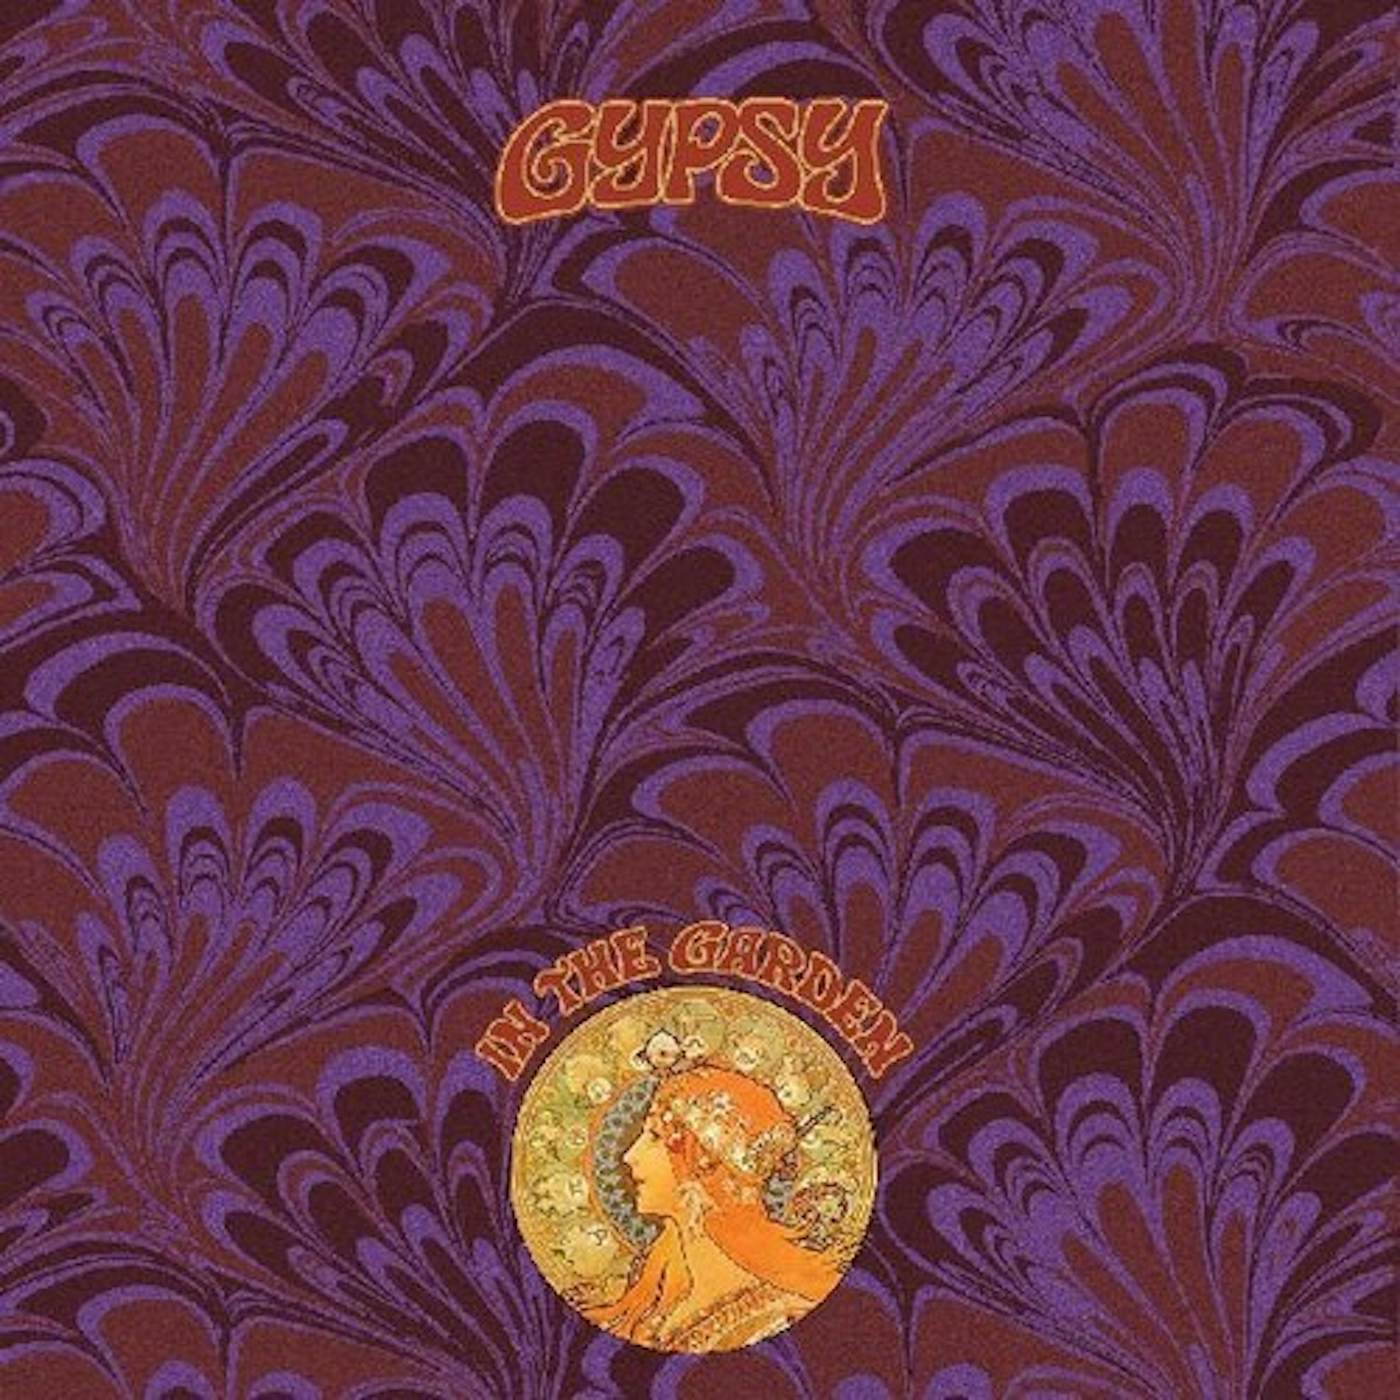 Gypsy IN THE GARDEN CD